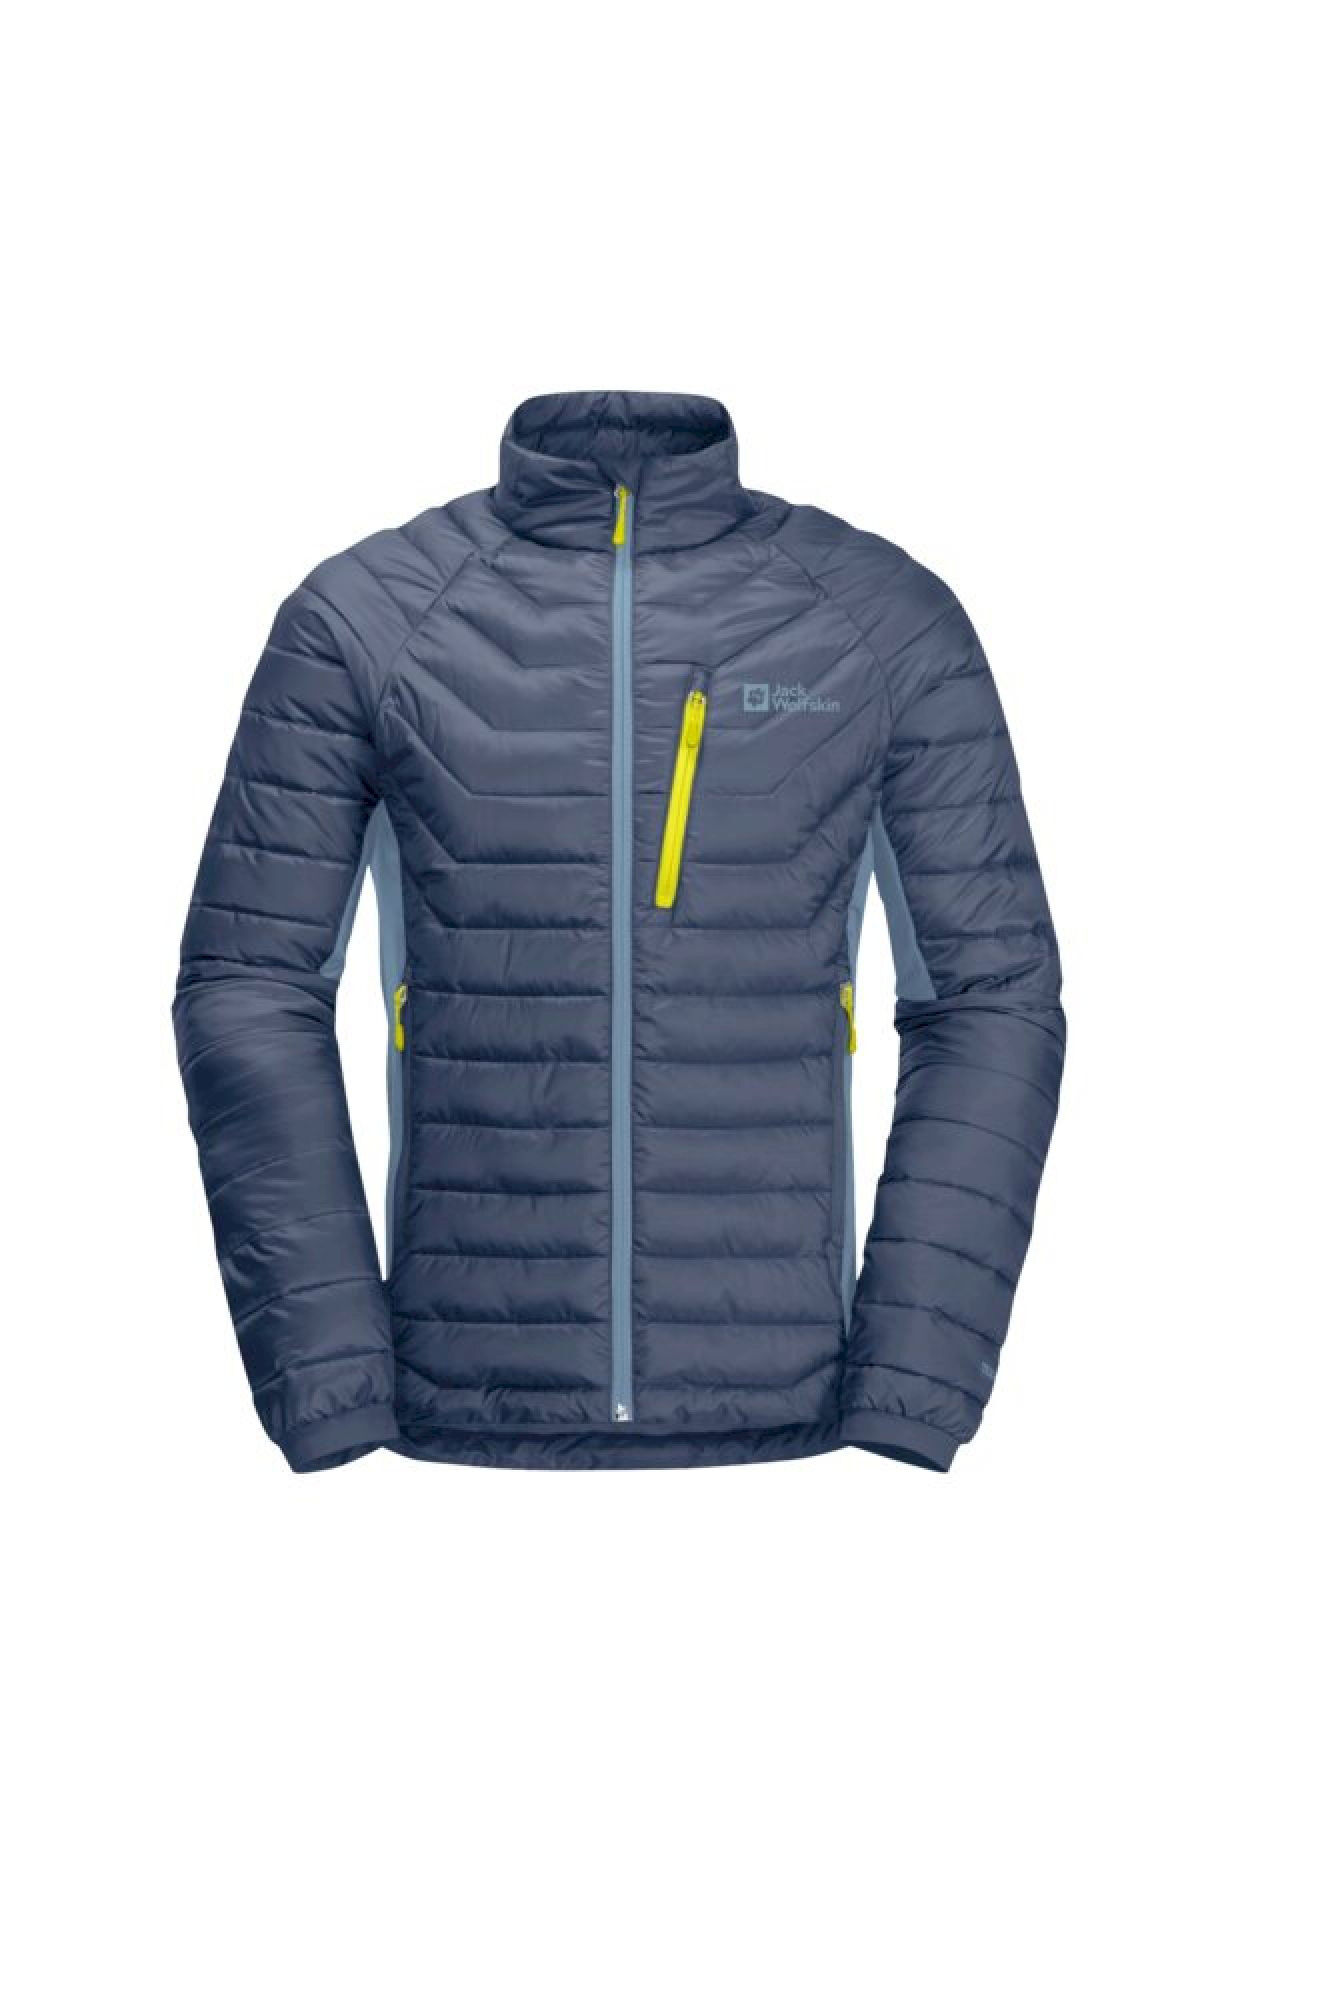 Jack Wolfskin Routeburn Pro Insulated Jacket - Synthetic jacket - Men's | Hardloop